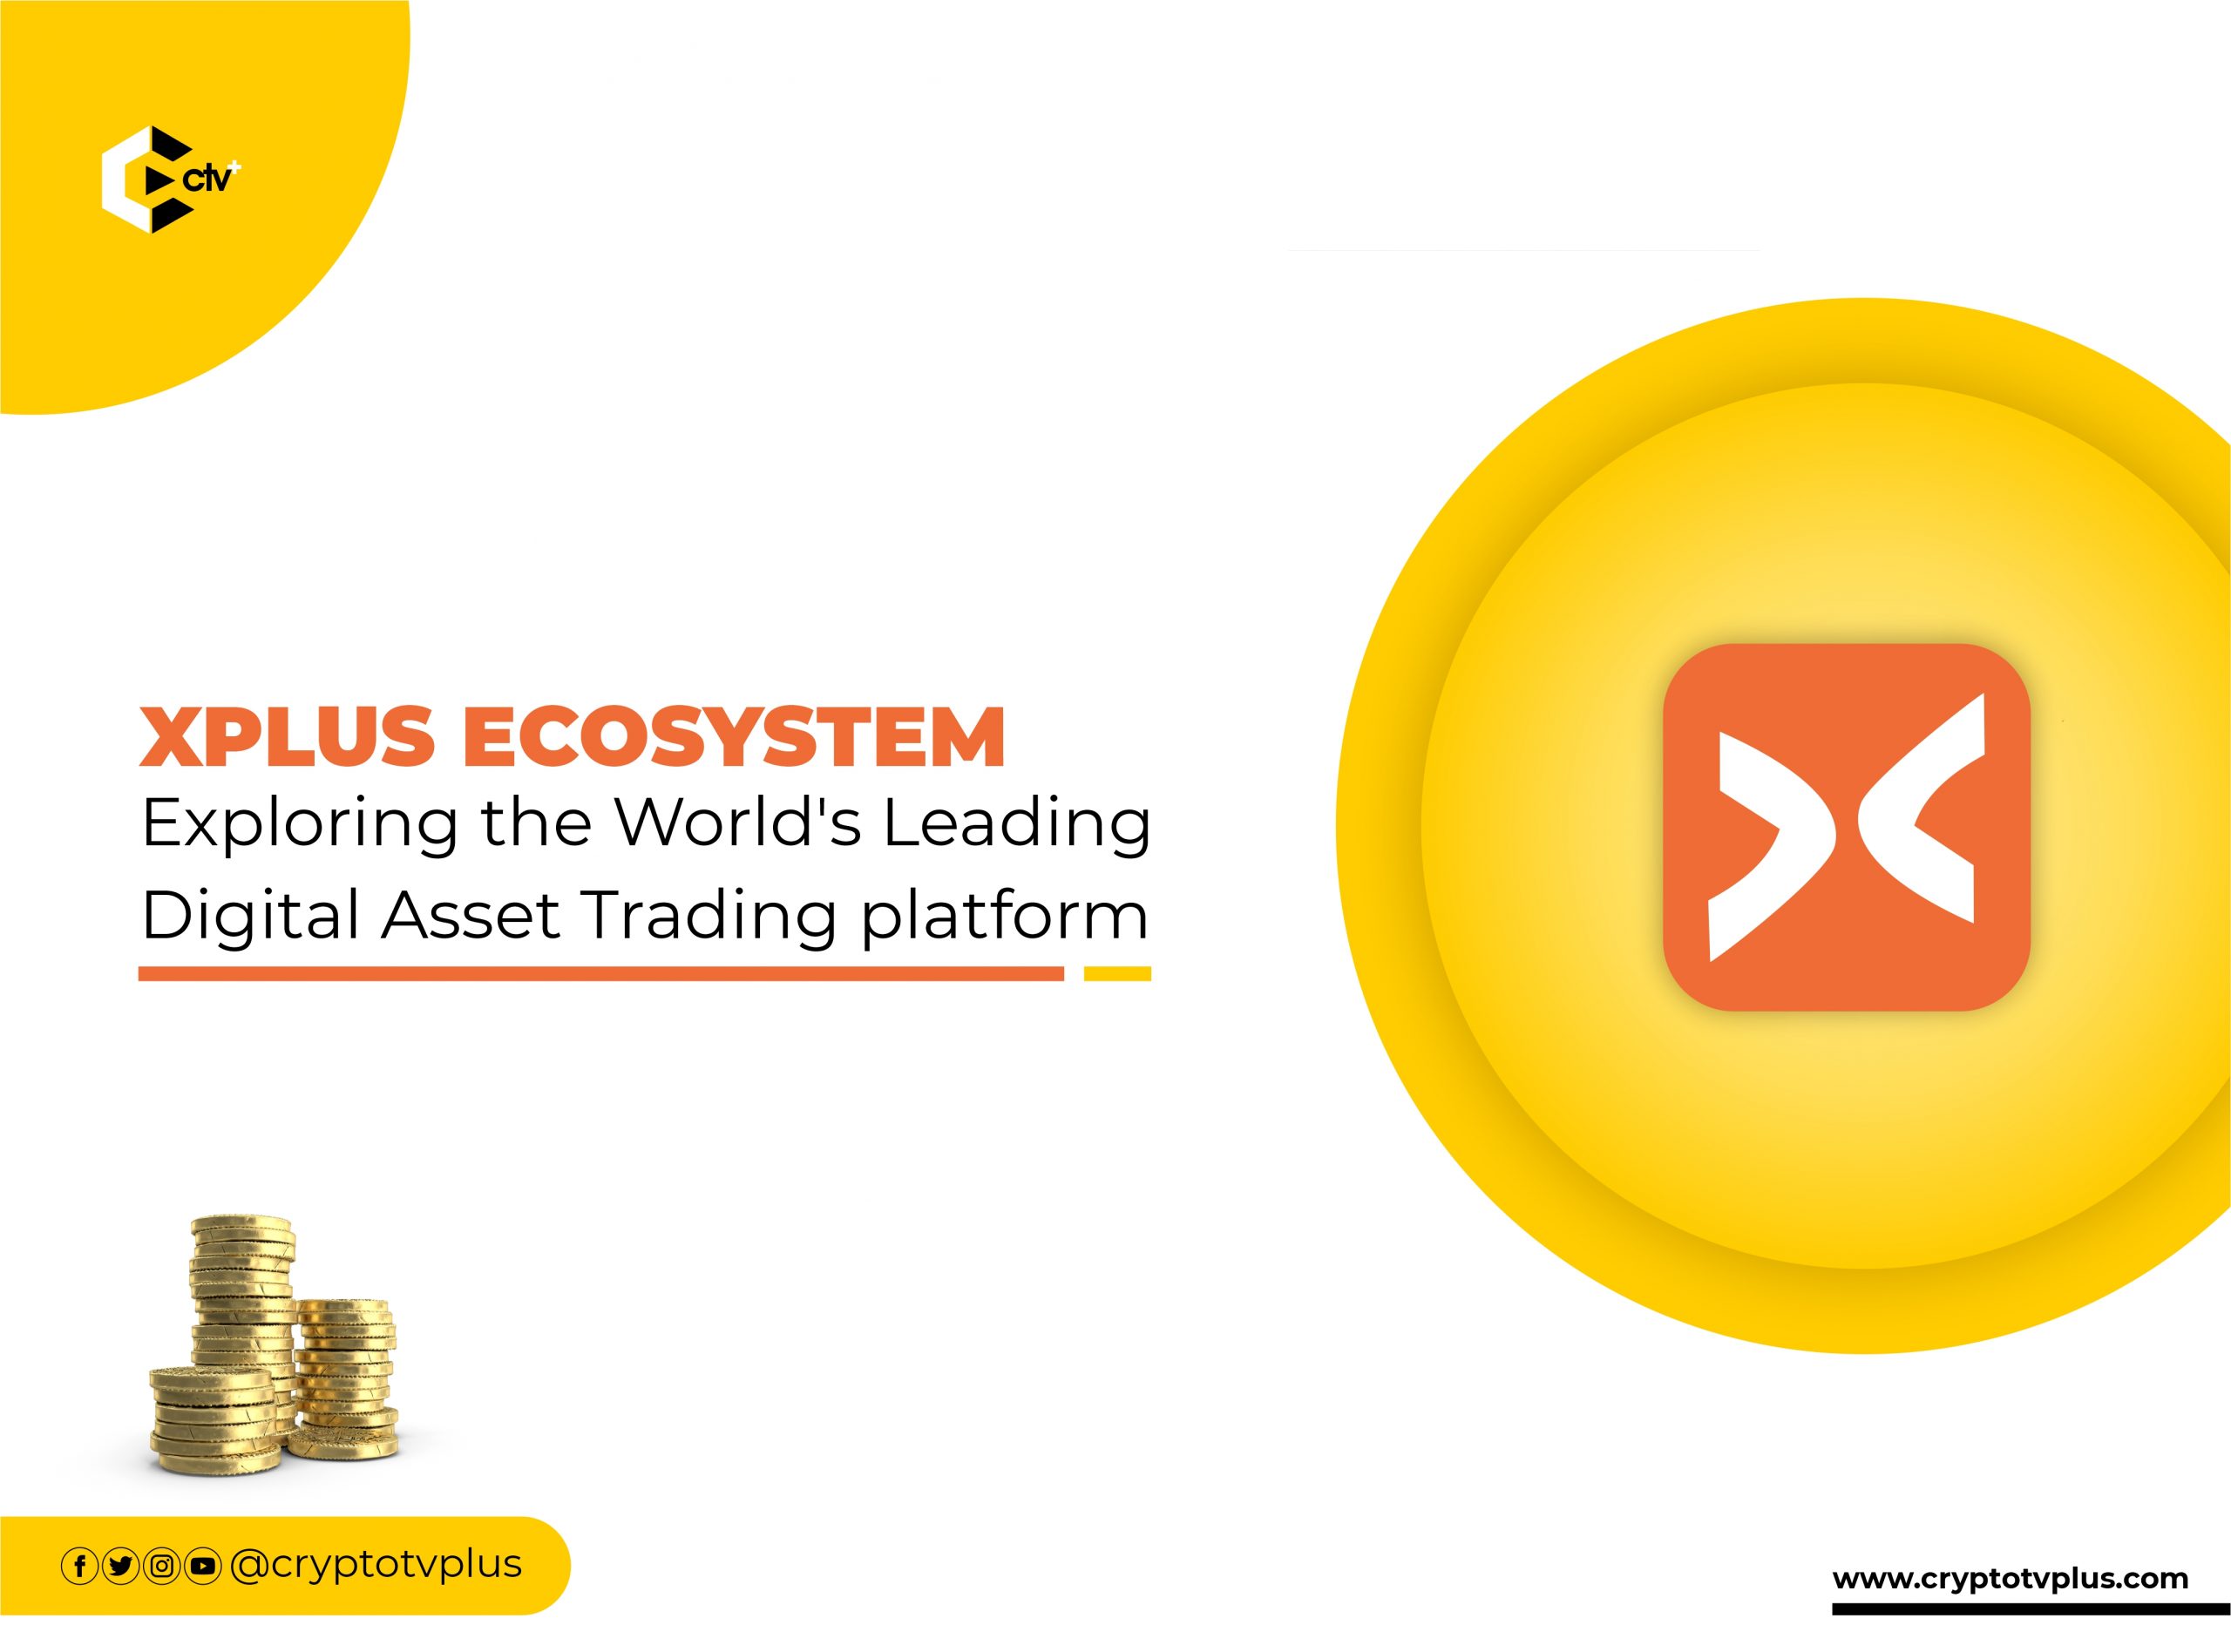 X.Plus Ecosystem: Exploring the World's Leading Digital Asset Trading platform

